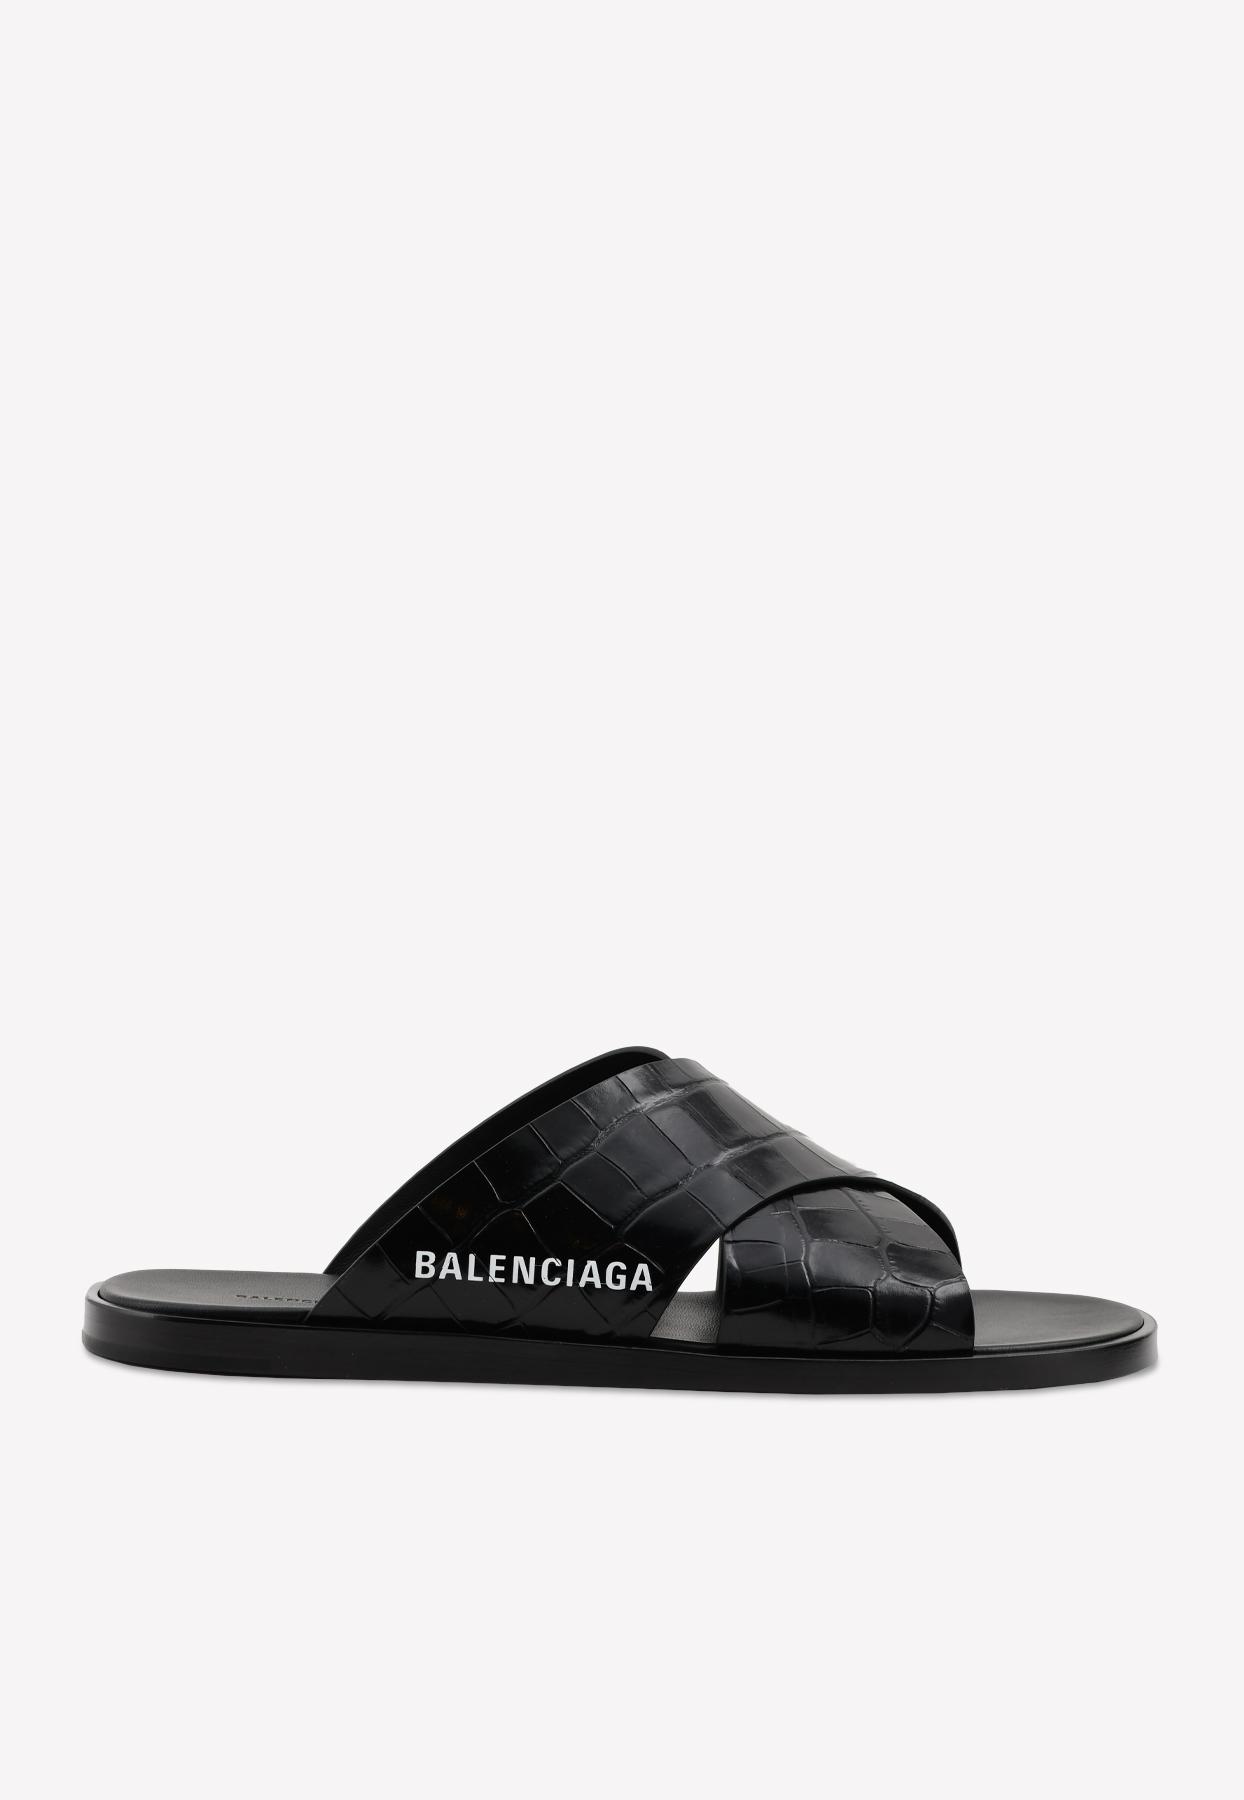 Top 73+ về balenciaga men sandals mới nhất - Du học Akina